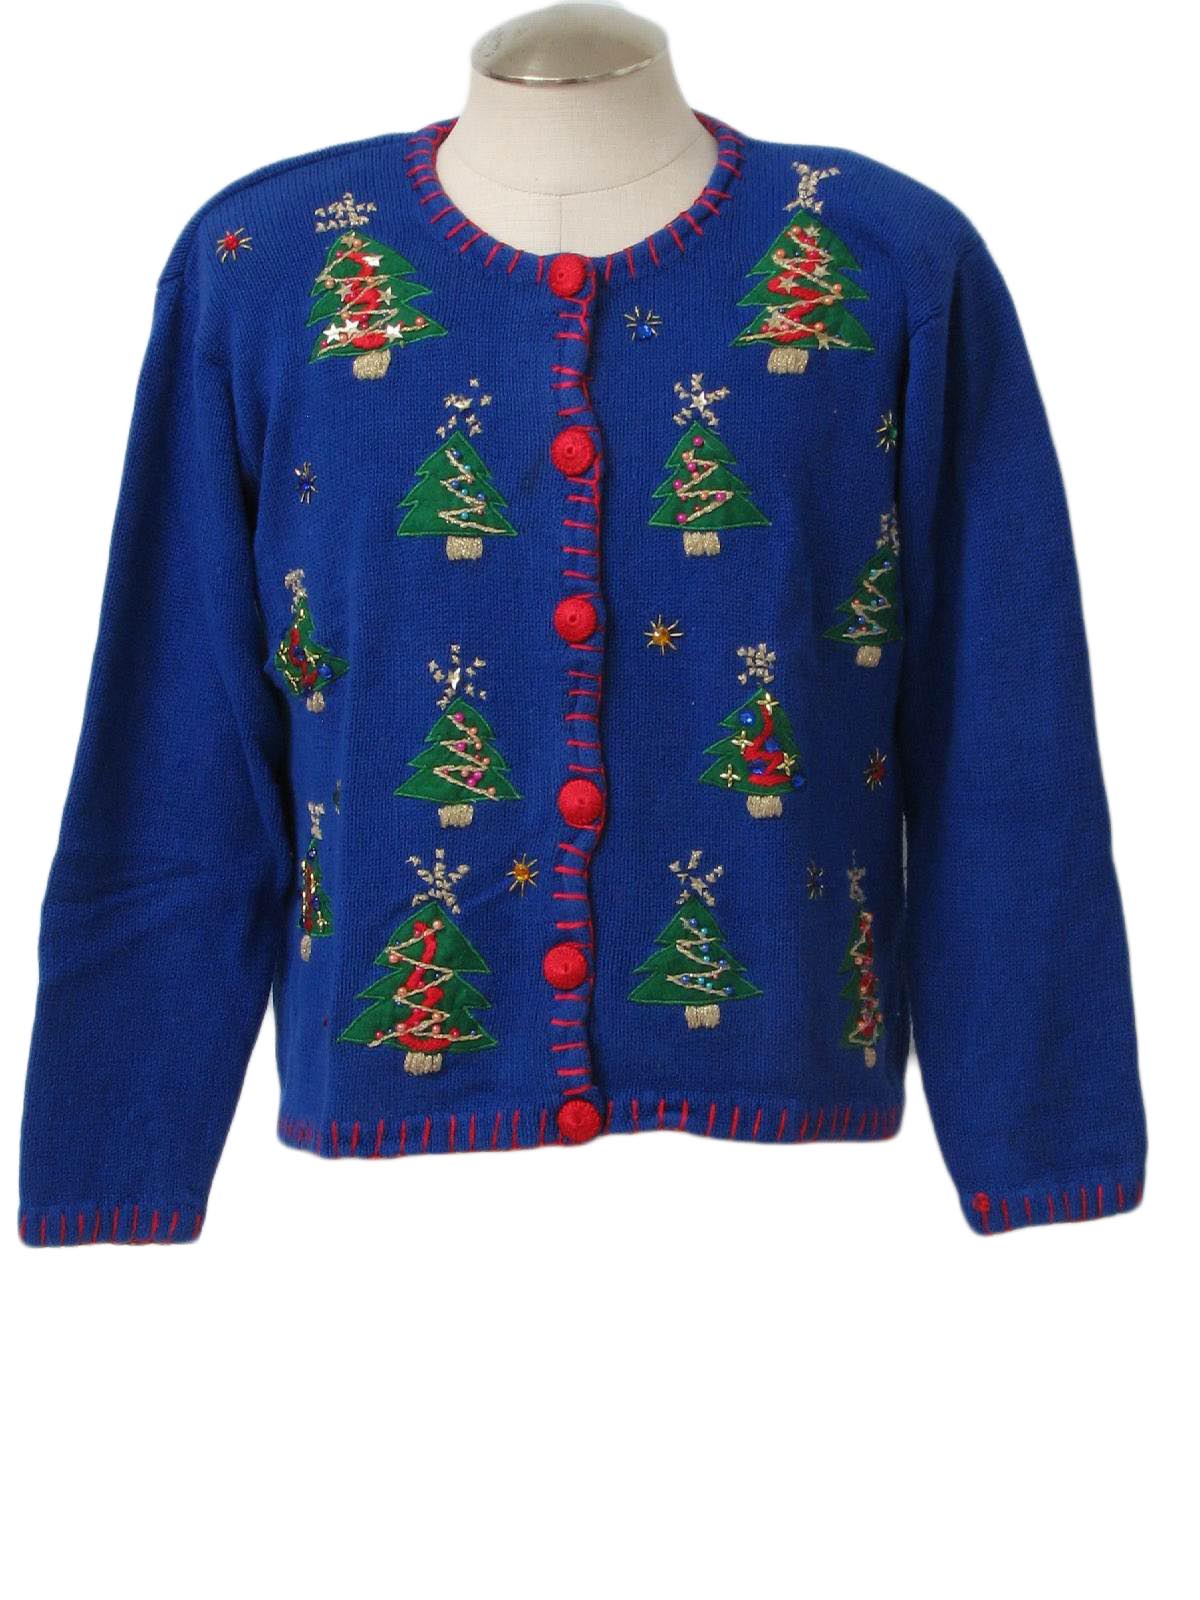 Womens Ugly Christmas Sweater : -Lisa International- Womens blue ...